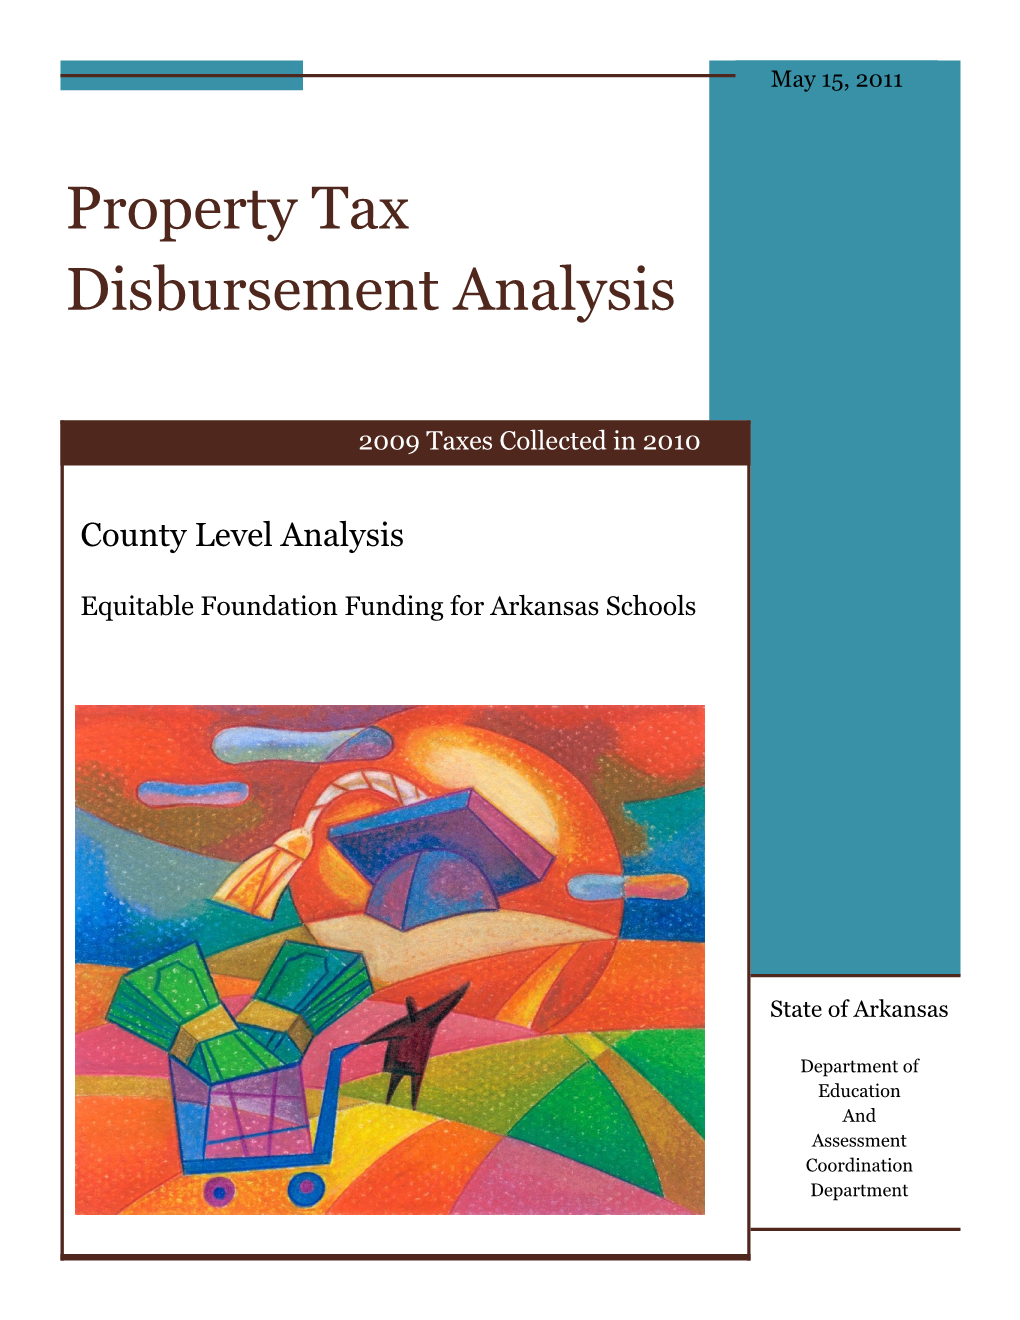 Property Tax Disbursement Analysis